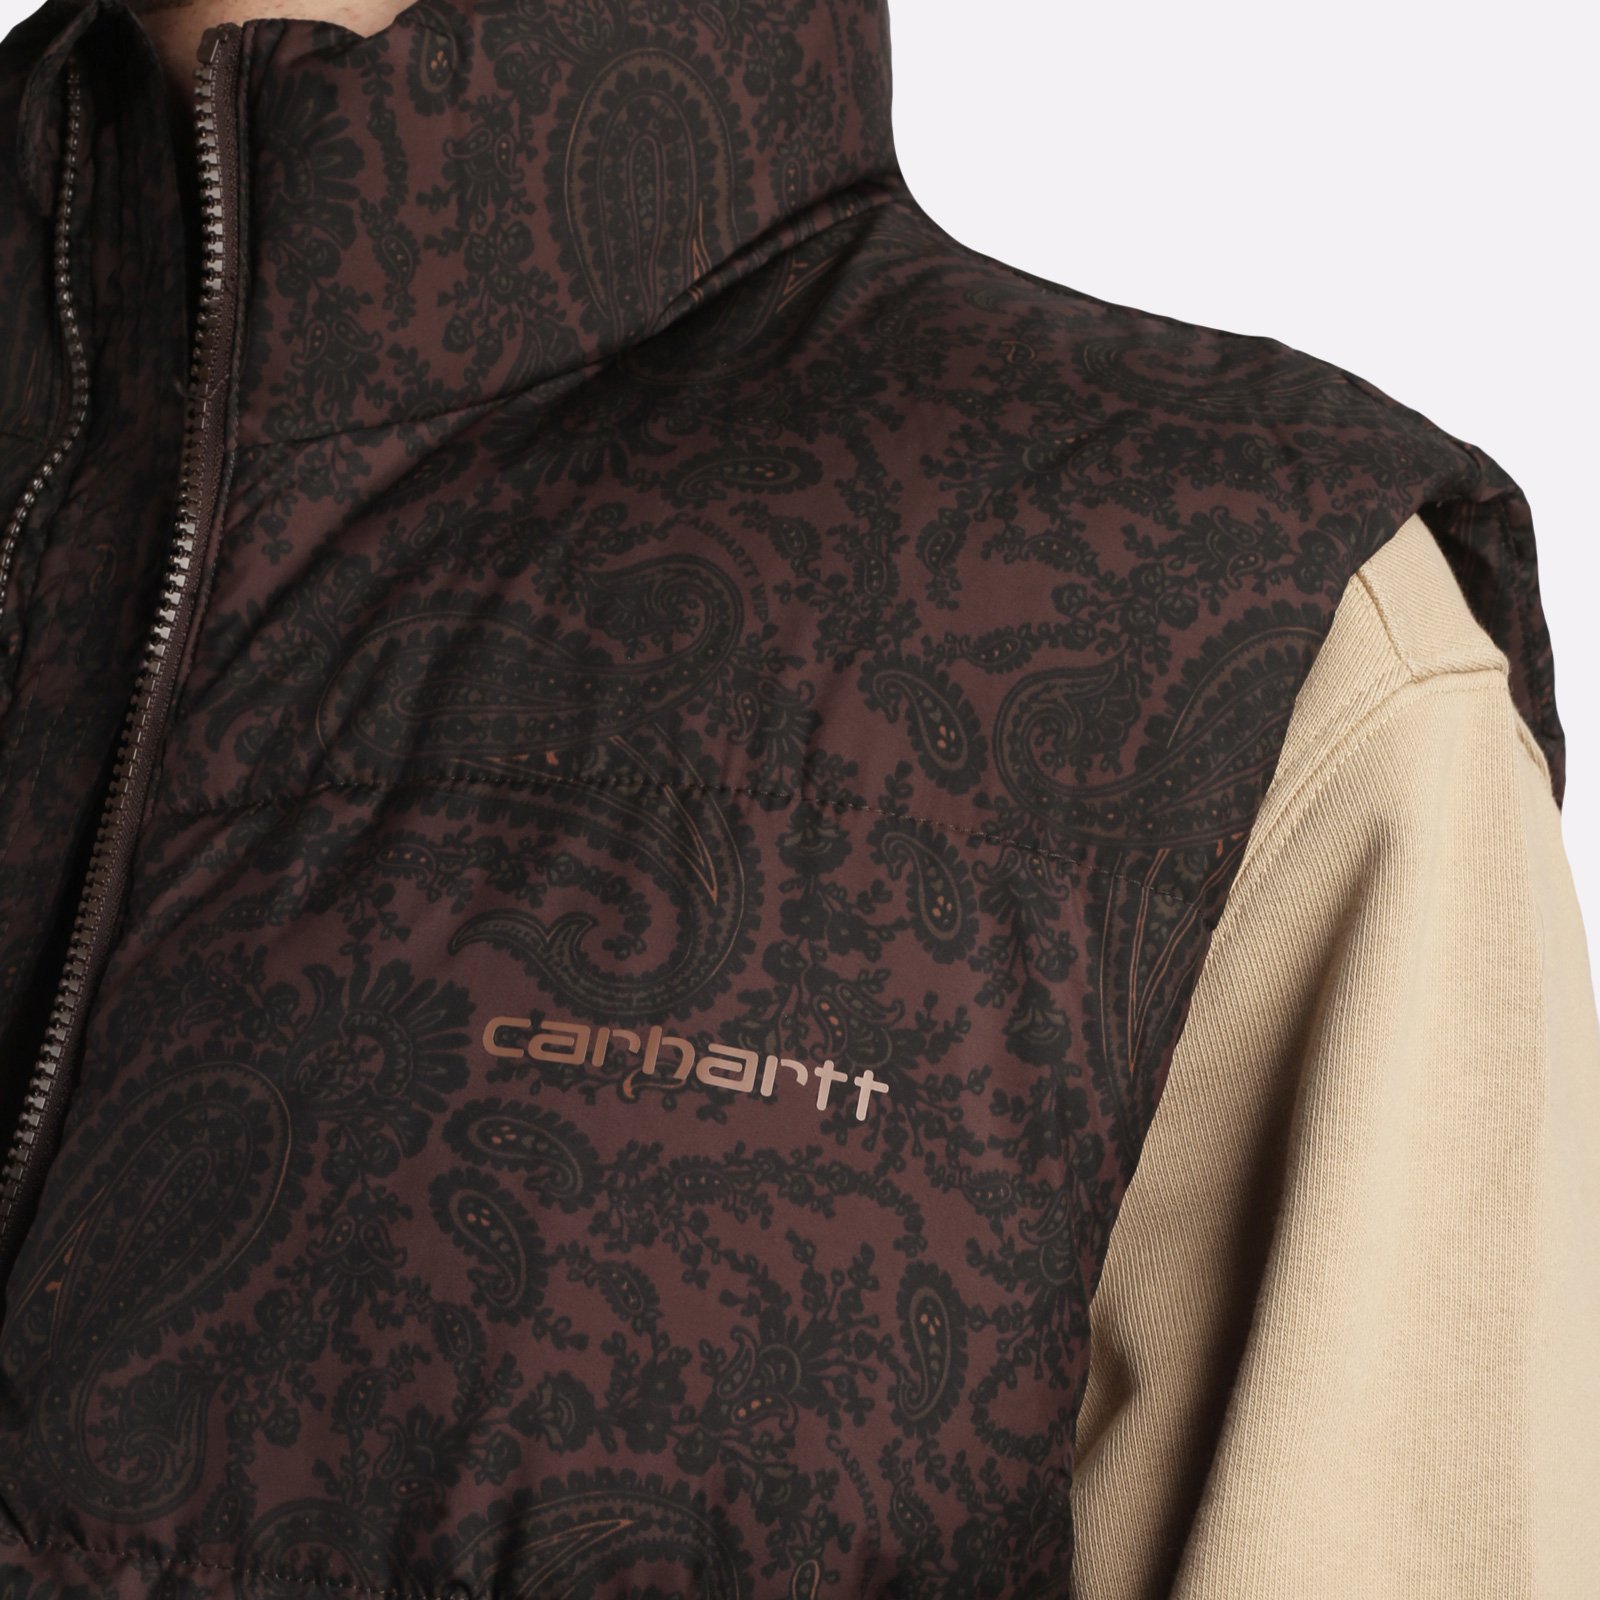 мужской жилет Carhartt WIP Springfield Vest  (I032265-buckeye/black)  - цена, описание, фото 5